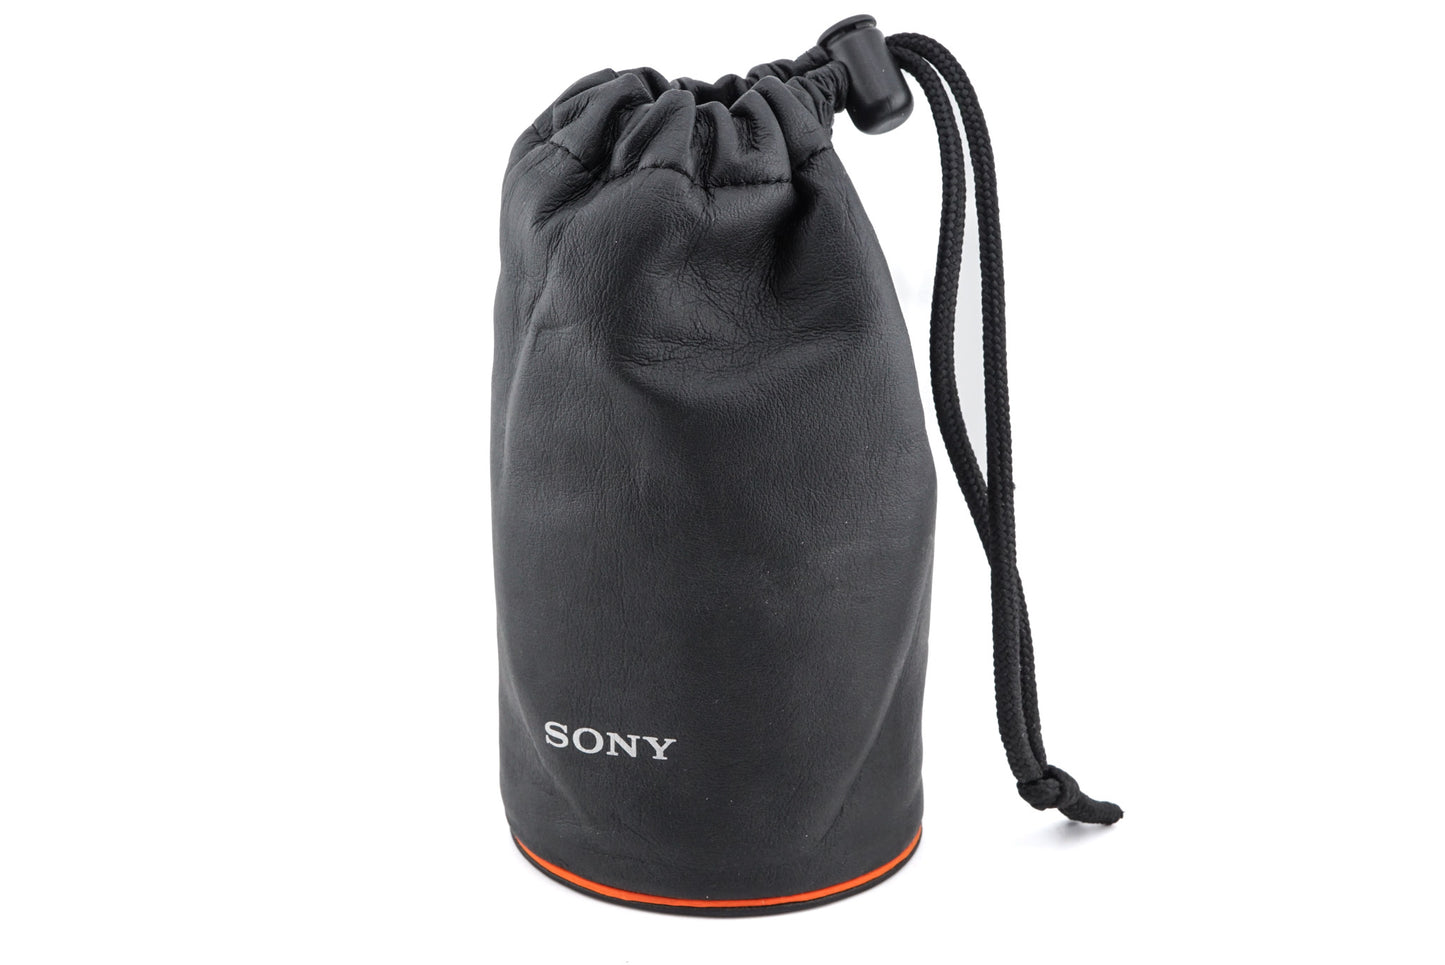 Sony 75-300mm f4.5-5.6